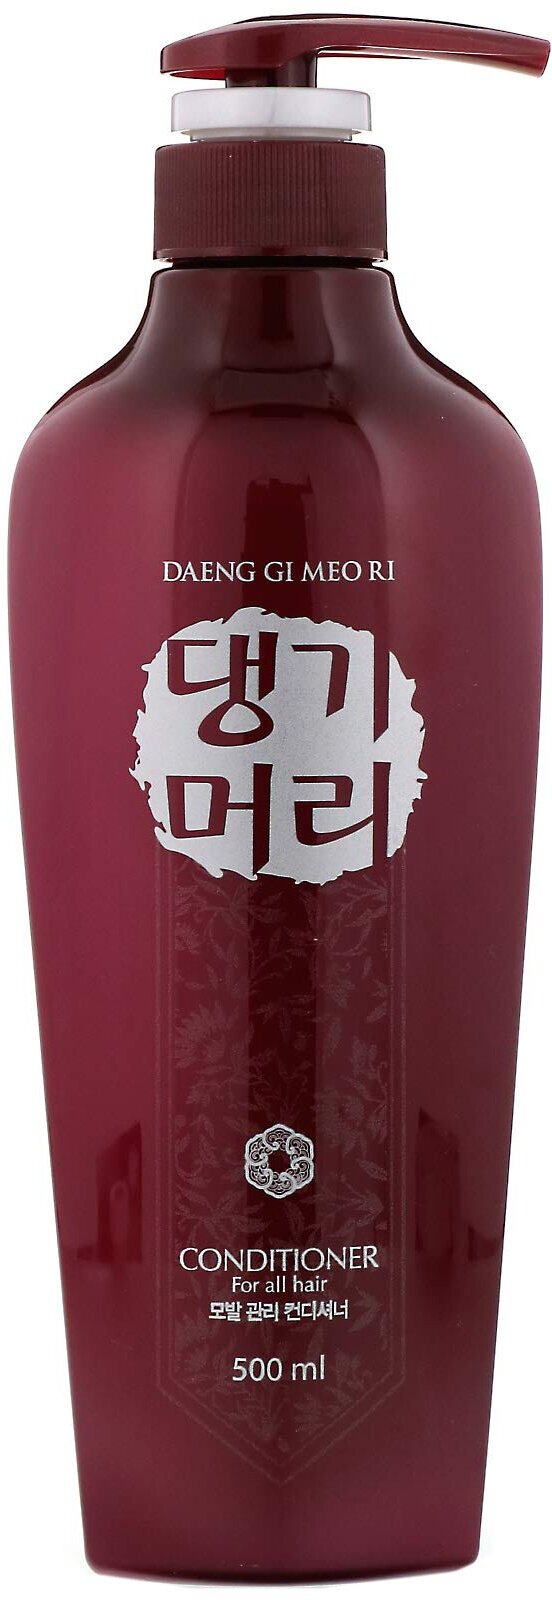 Кондиционер для волос Daeng Gi Meo Ri Conditioner For all hair, 500 мл